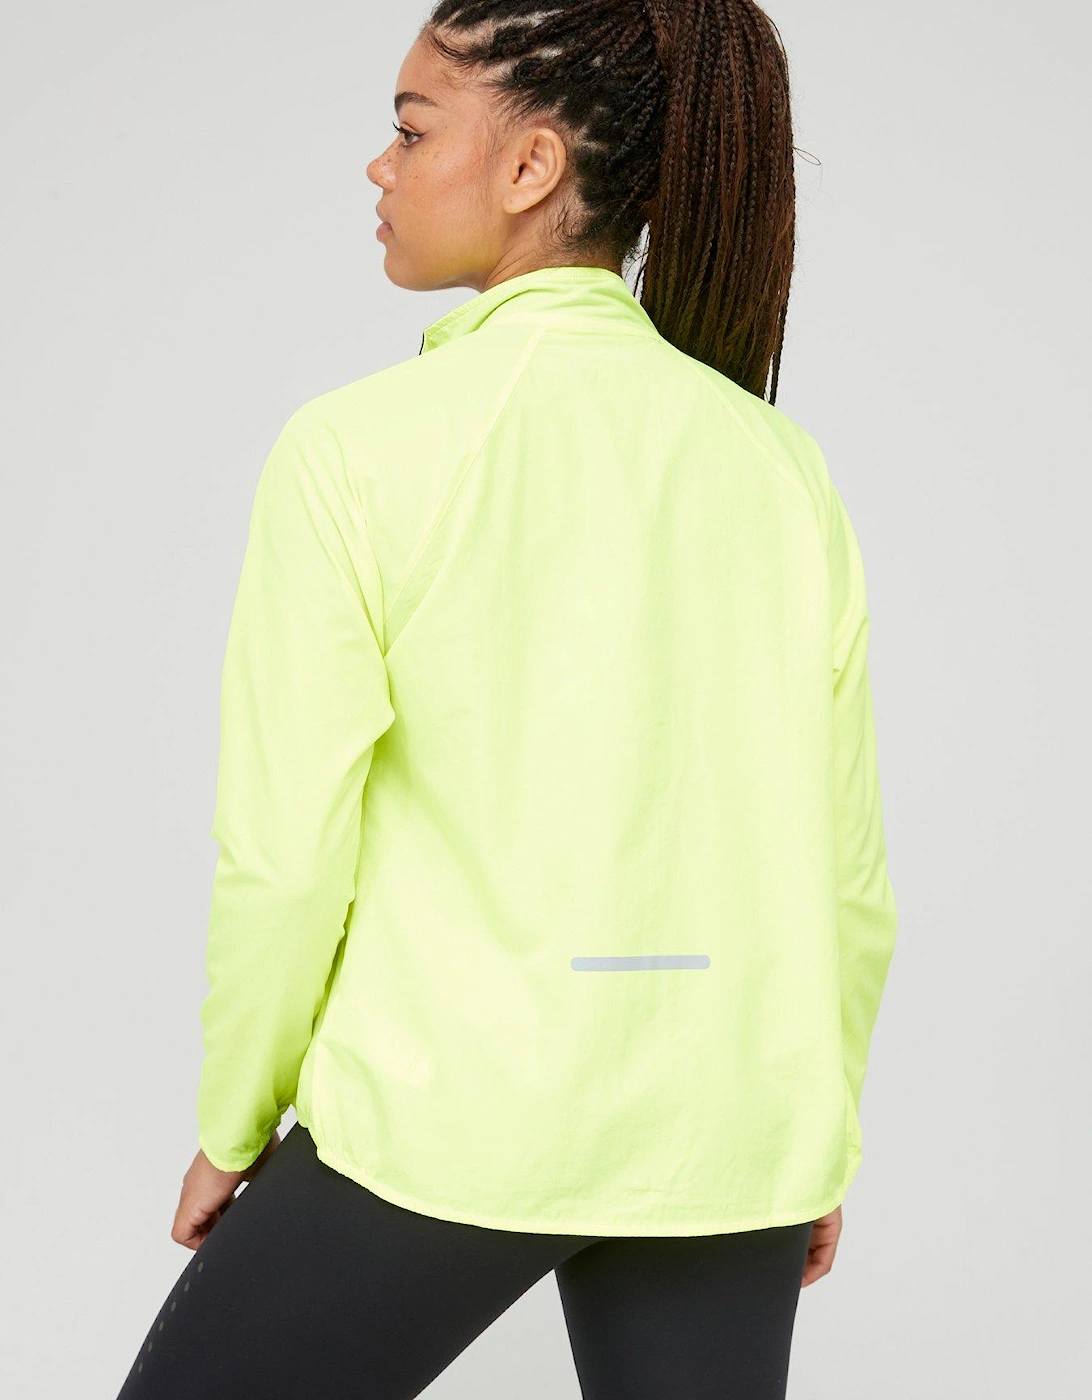 Women's Core Jacket - Neon